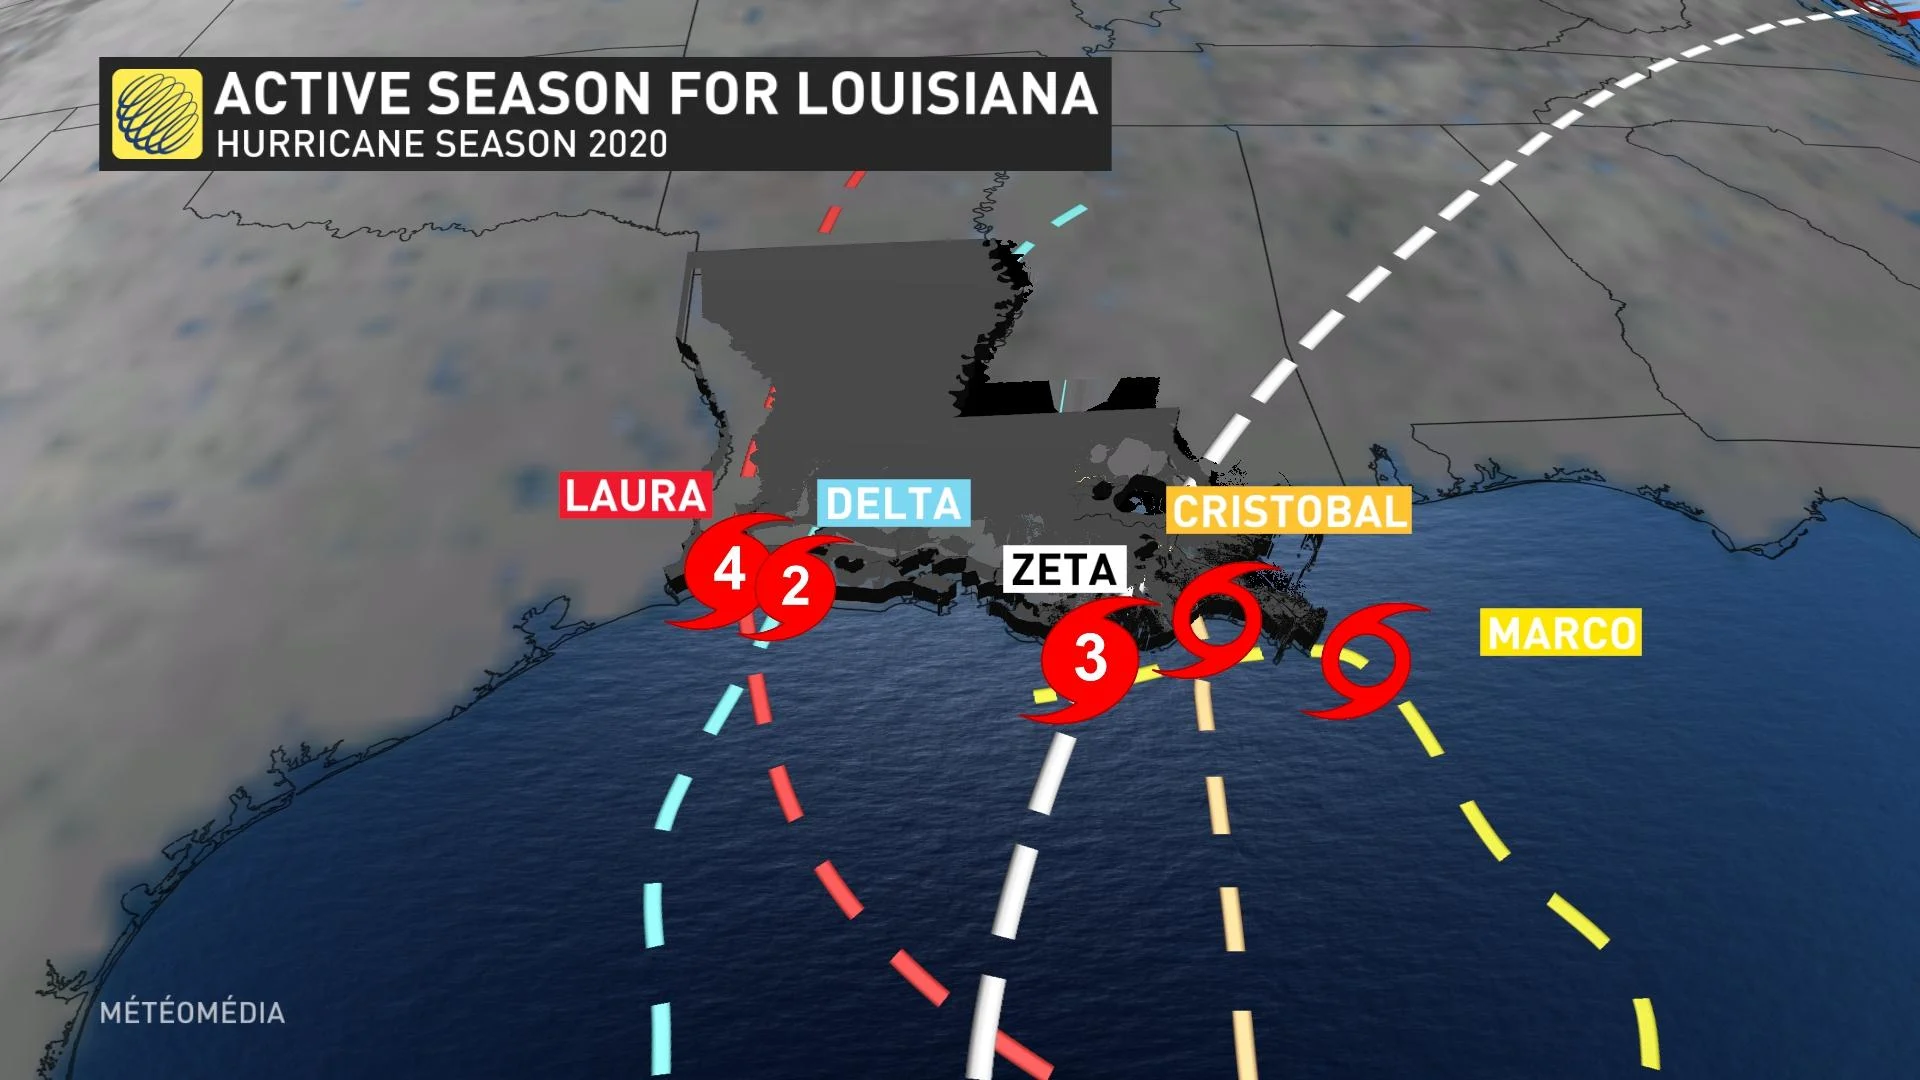 Zeta Louisiana Active Season